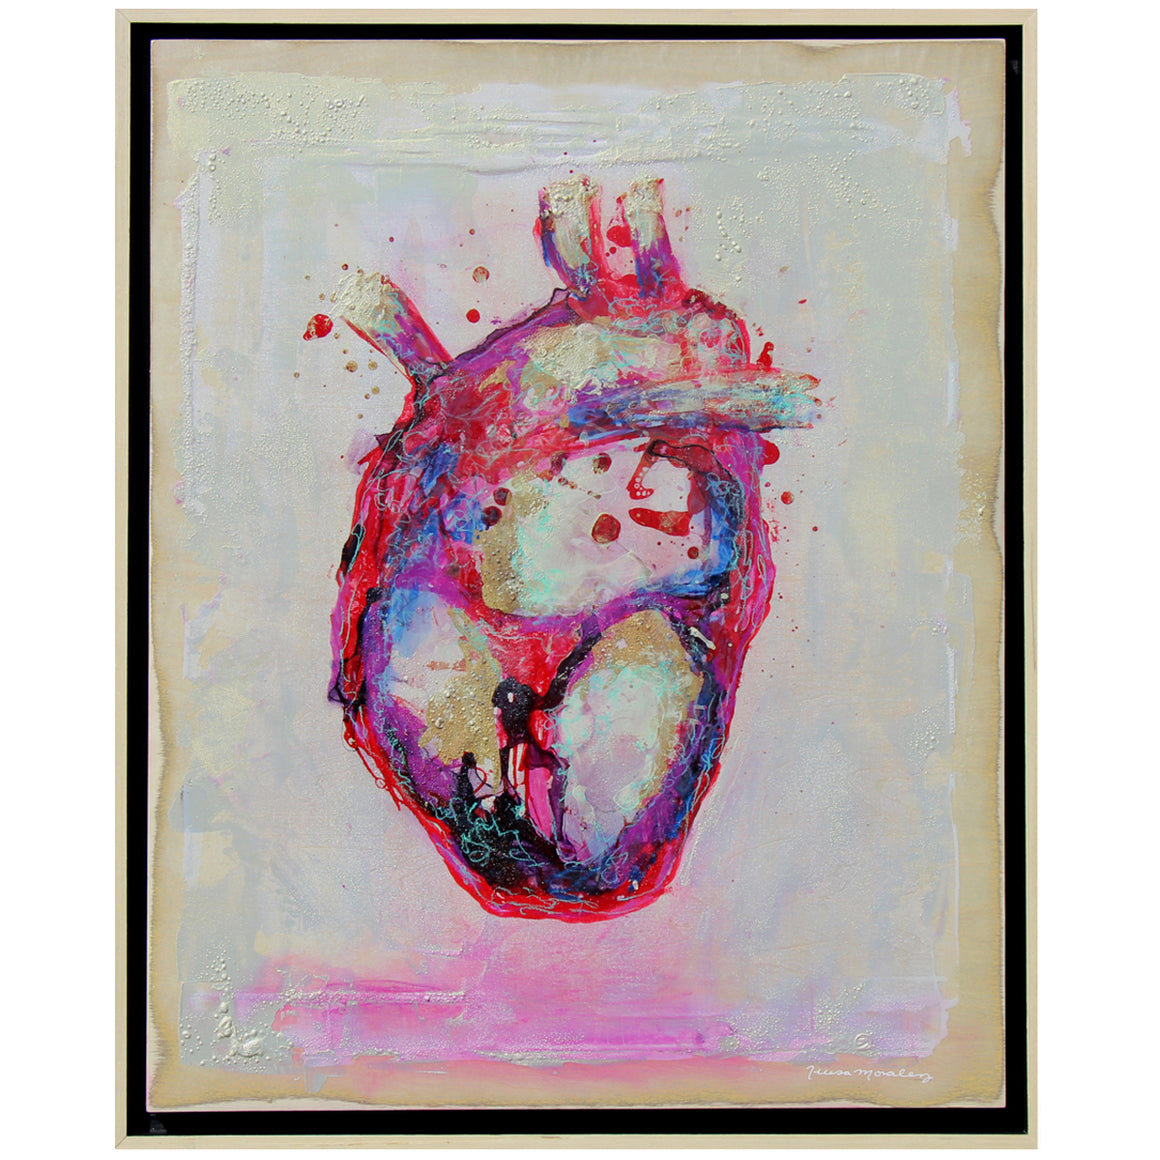 Matters of the Heart 2 - 16x20" - Teresa Moralez